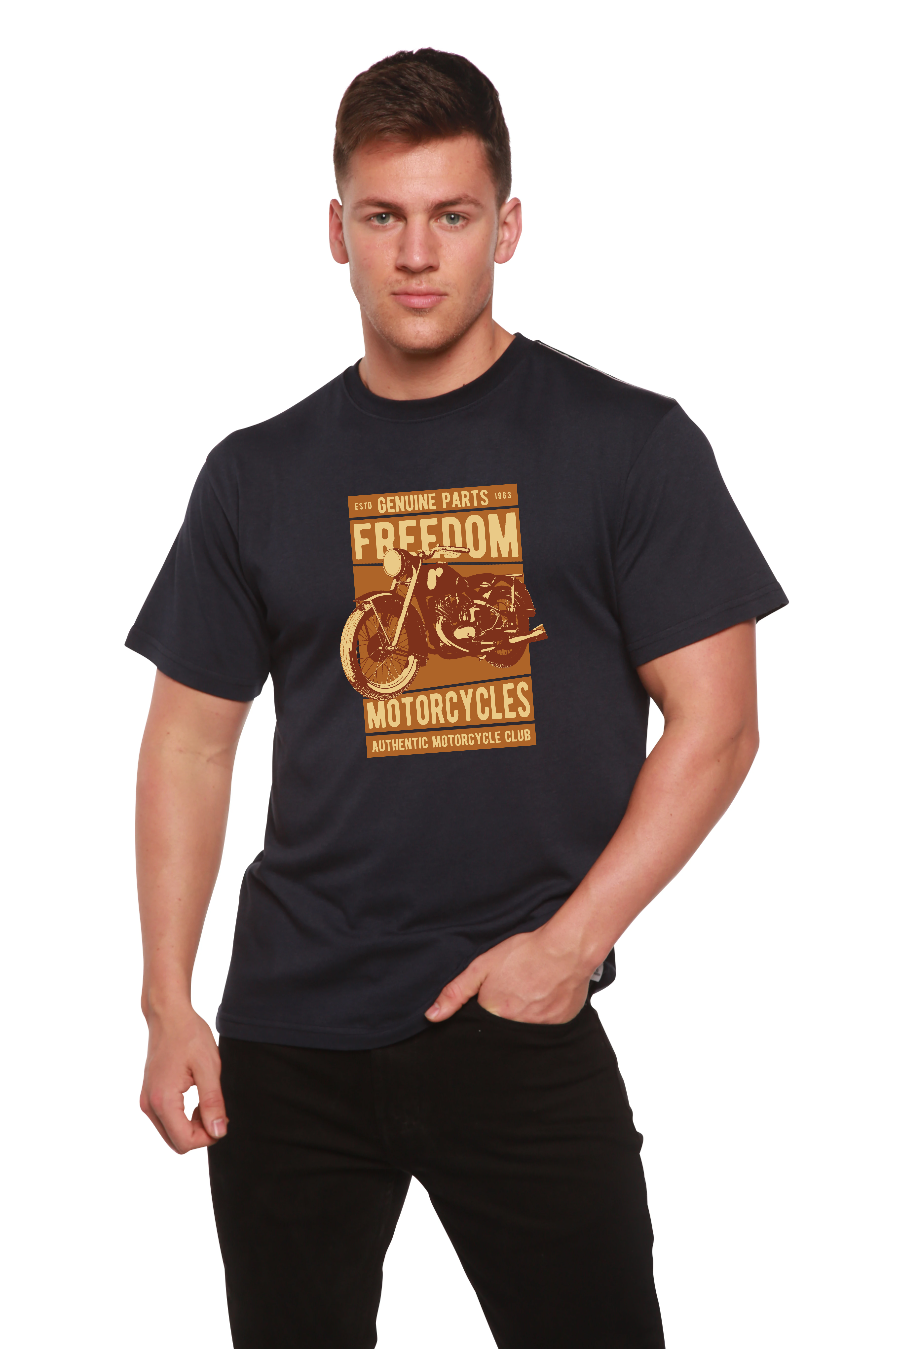 Freedom Motorcycles Men's Bamboo Viscose/Organic Cotton Short Sleeve T-Shirt - Spun Bamboo